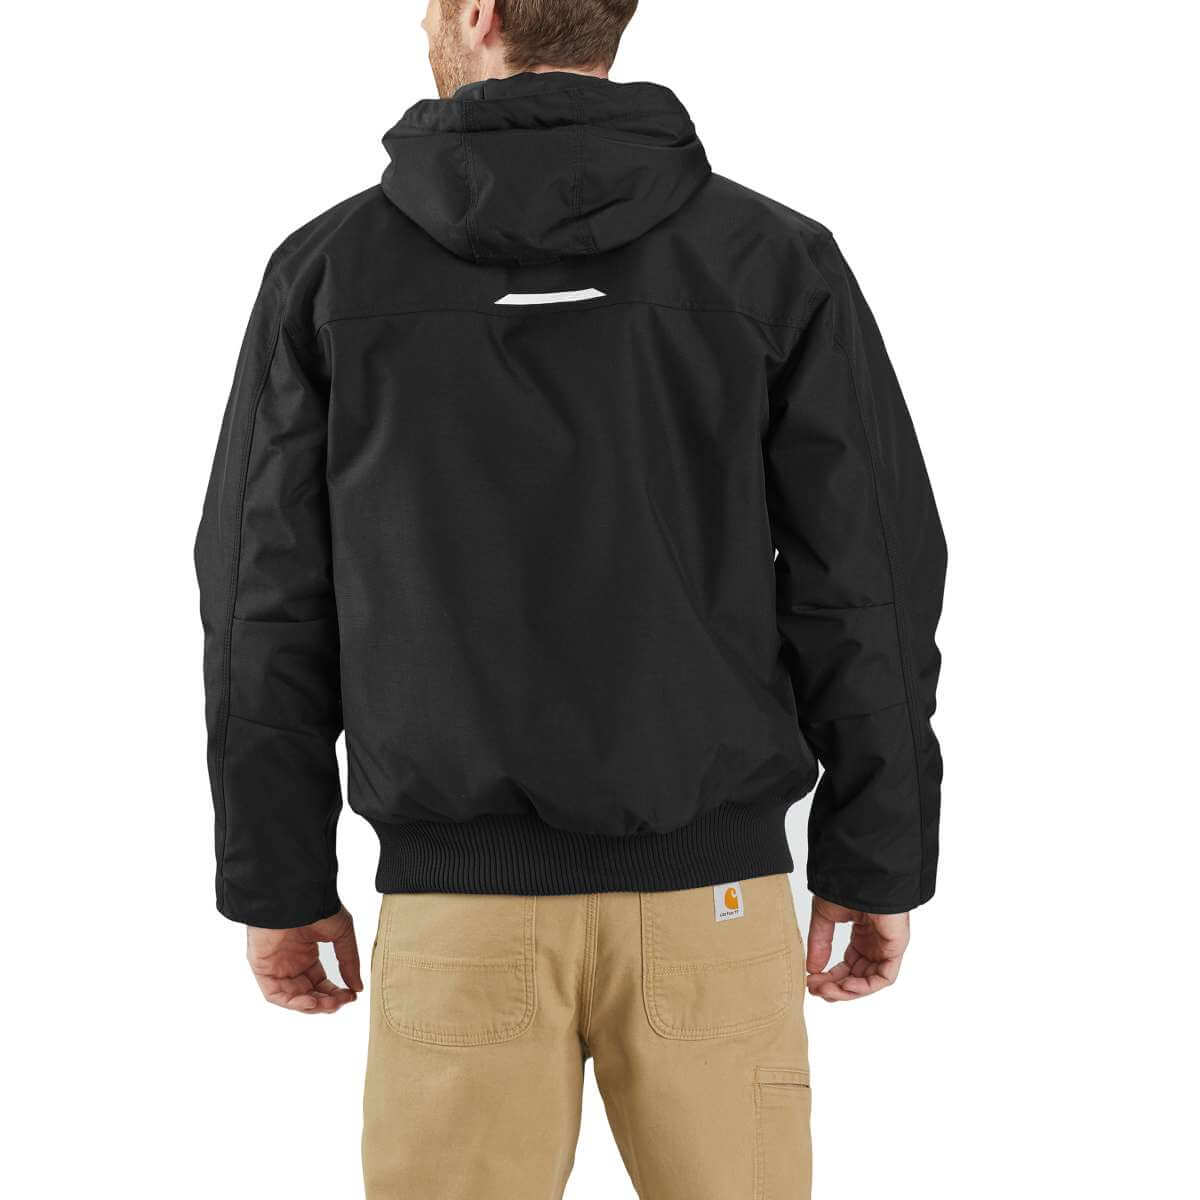 104458 - Carhartt Men's Yukon Extremes Insulated Active Jacket